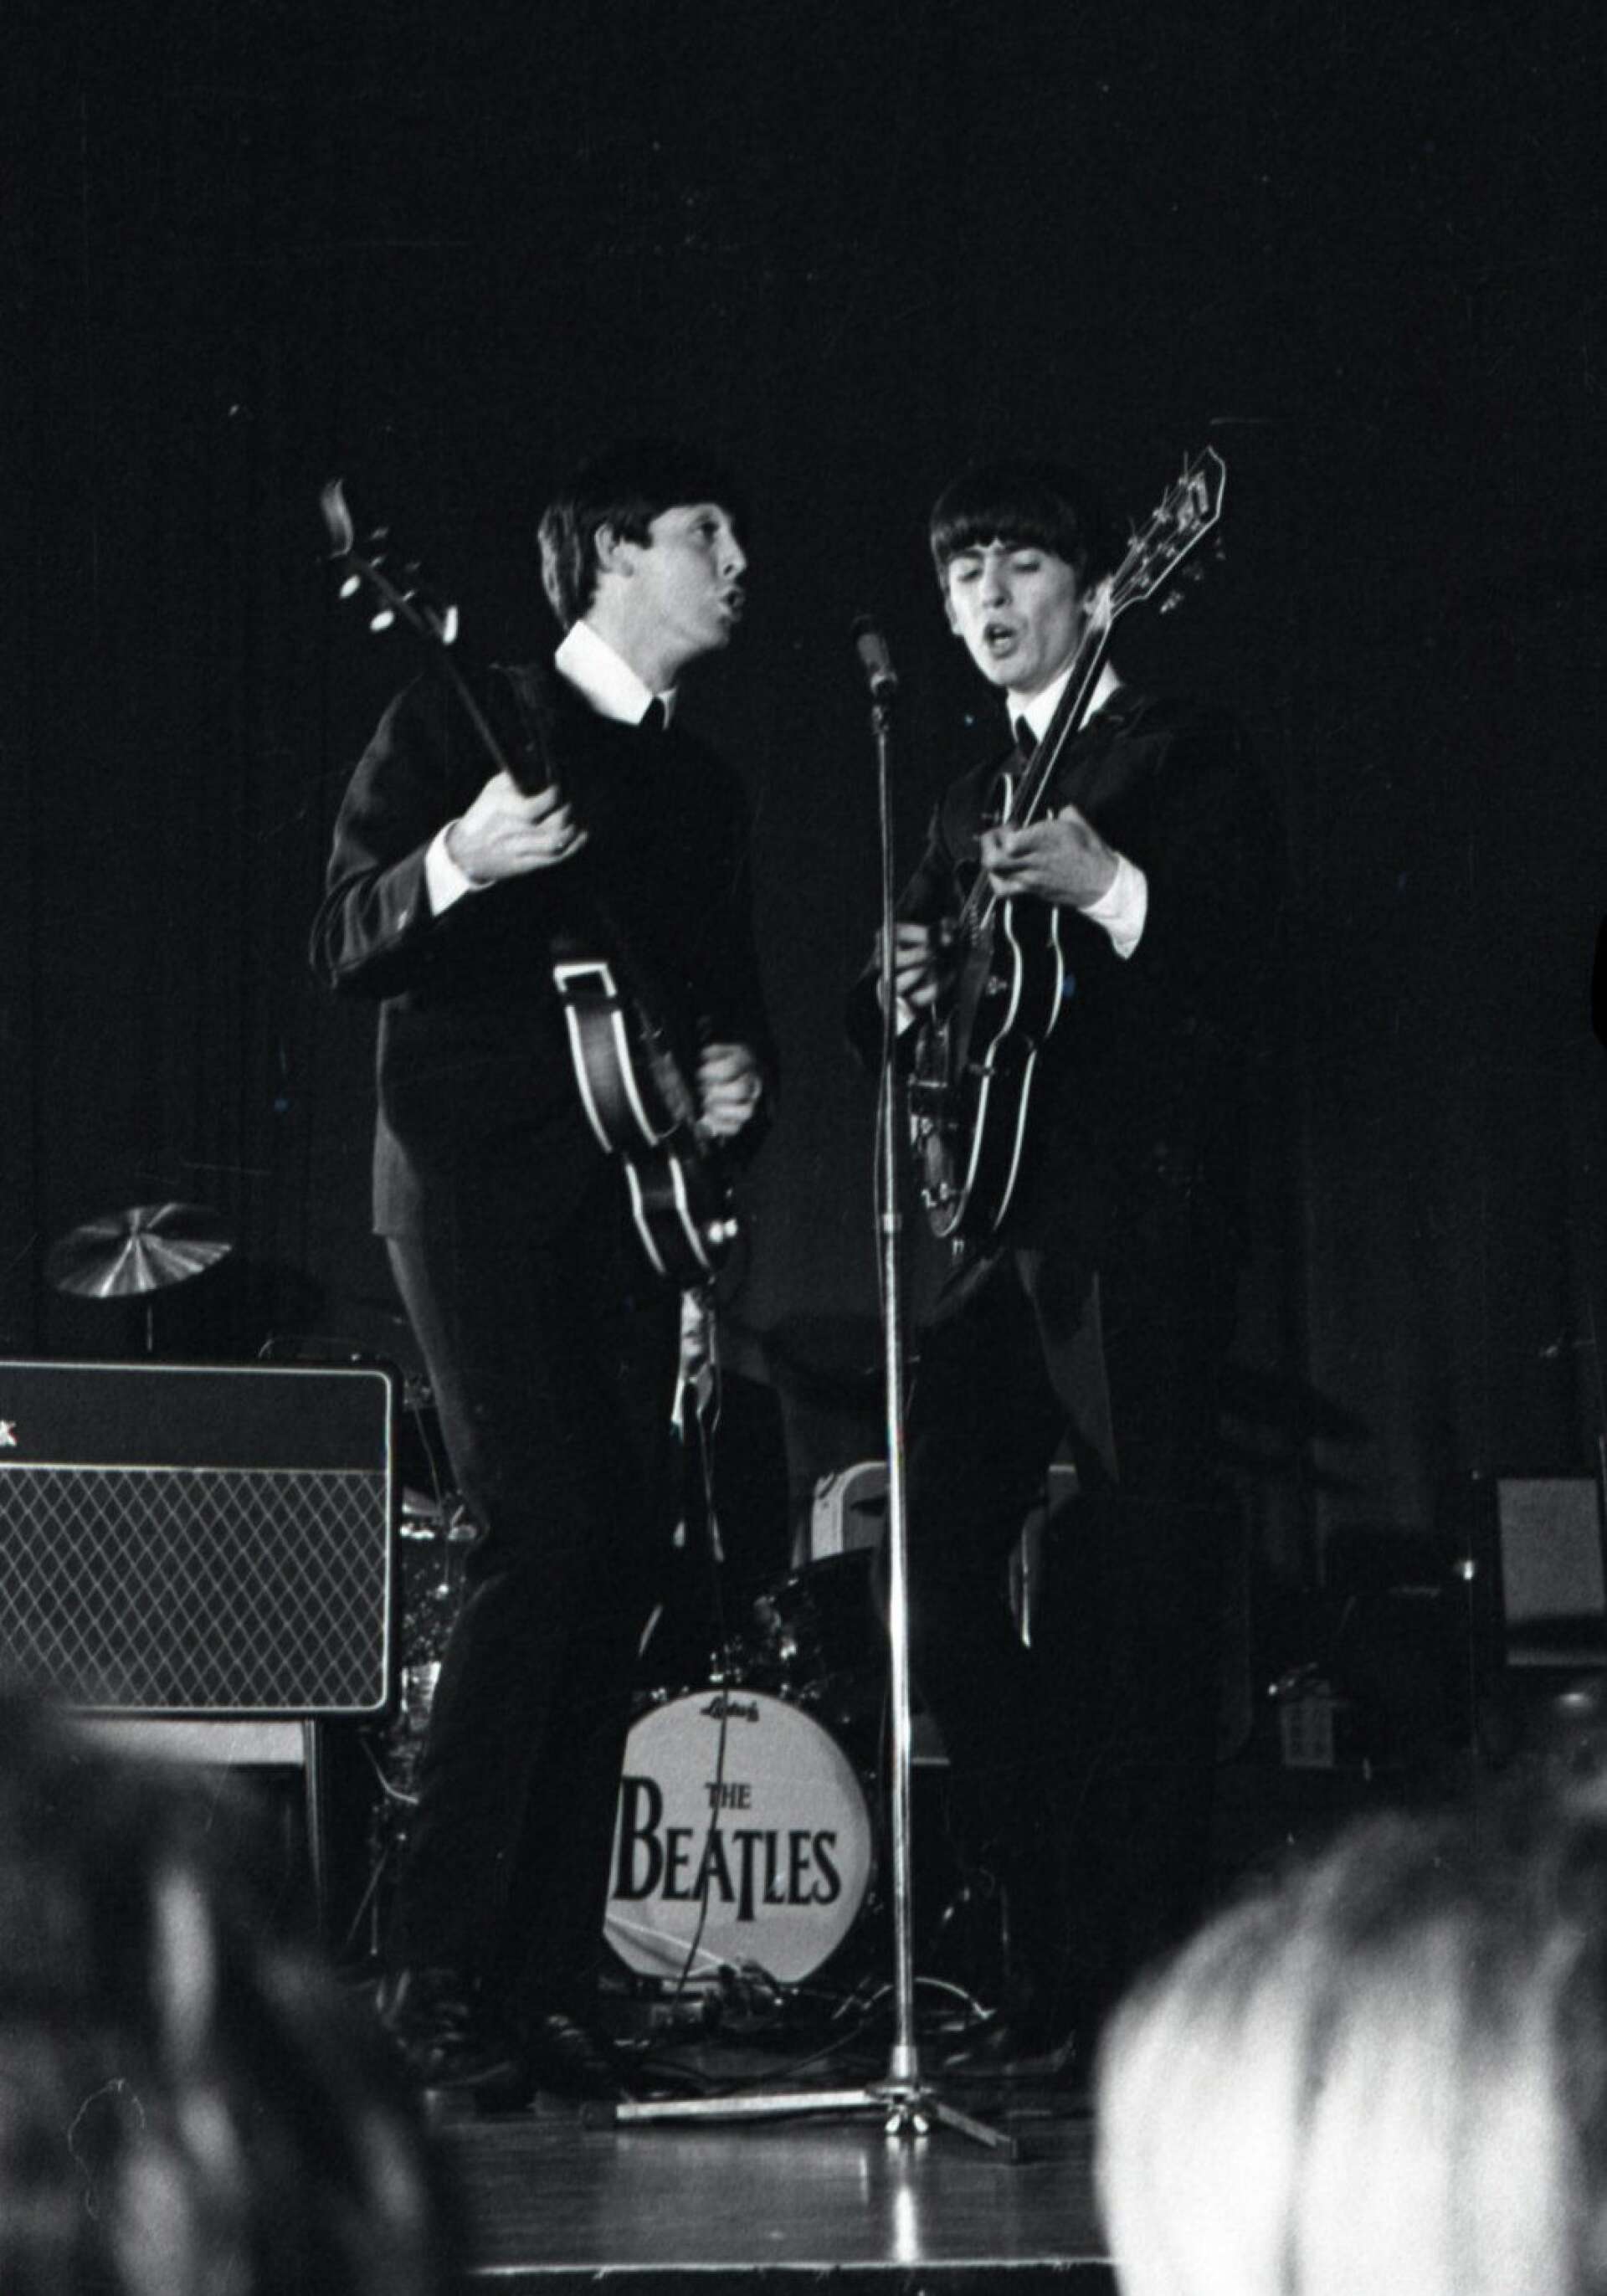 Ytterligare en av sammanlagt åtta bilder på Beatles i Sundstaaulan som köptes in av Tracks Ltd.